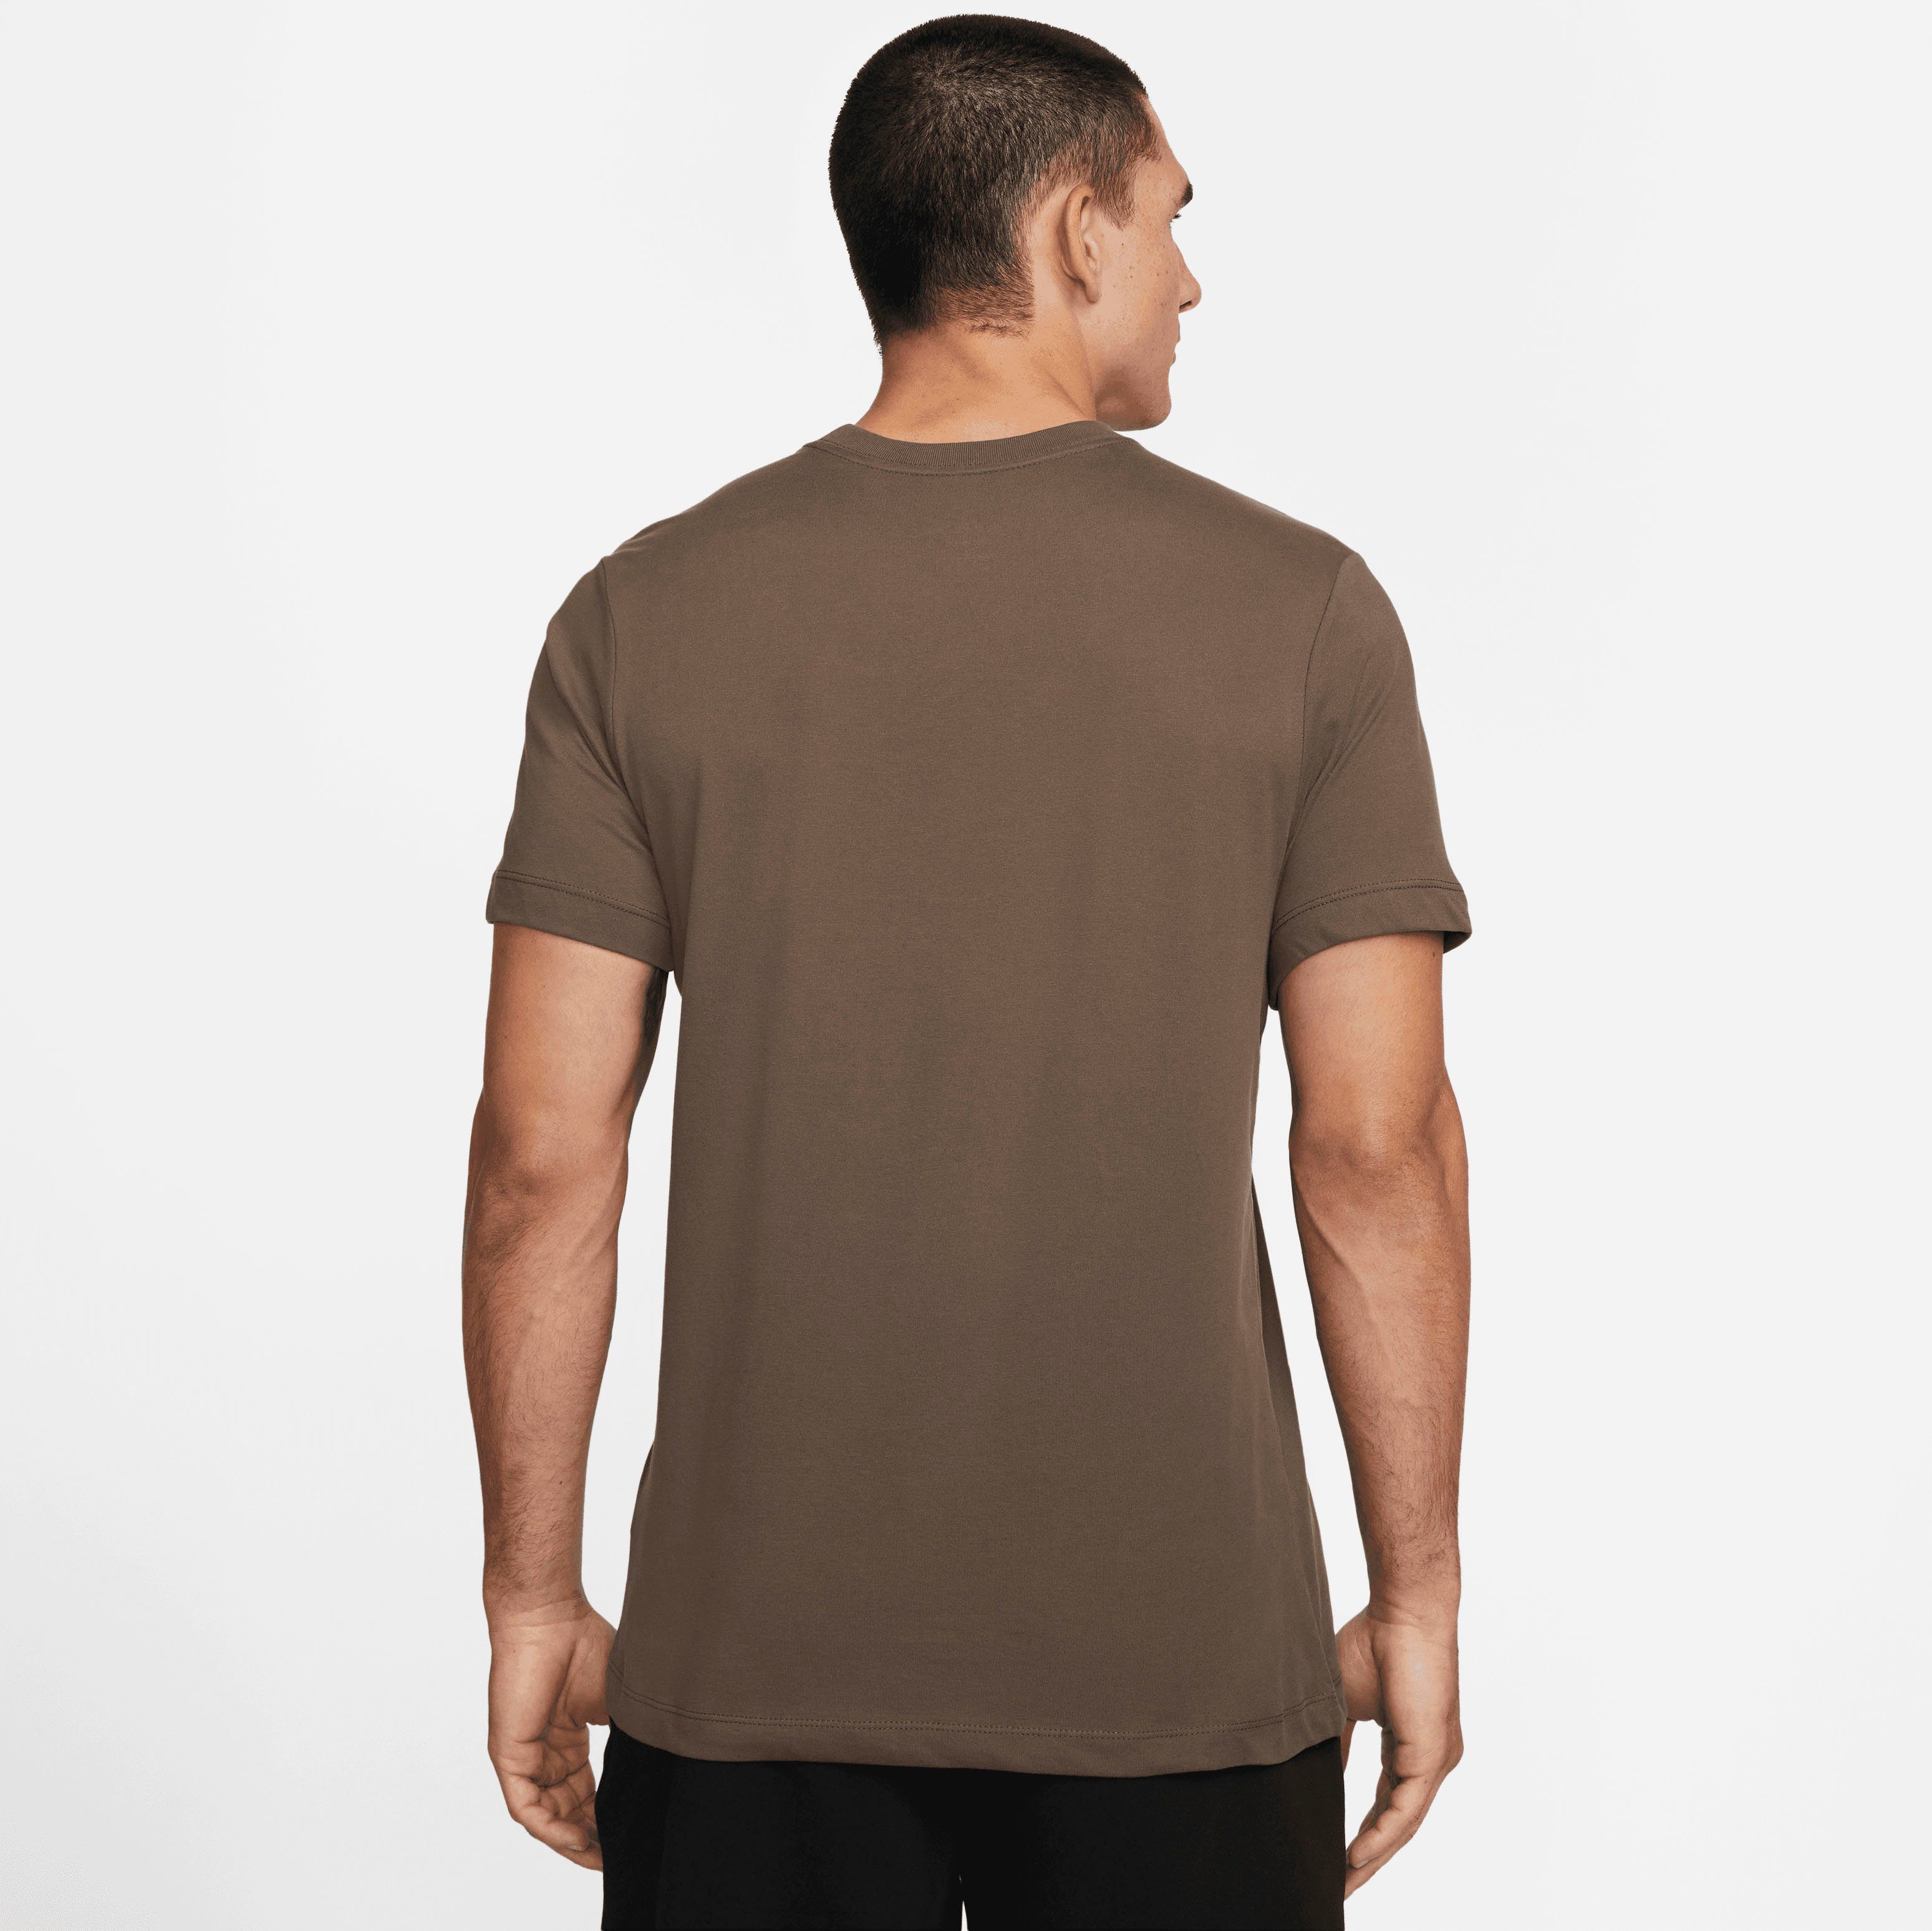 Sport Sportshirts Nike Yogashirt Dri-FIT Men's Yoga T-Shirt